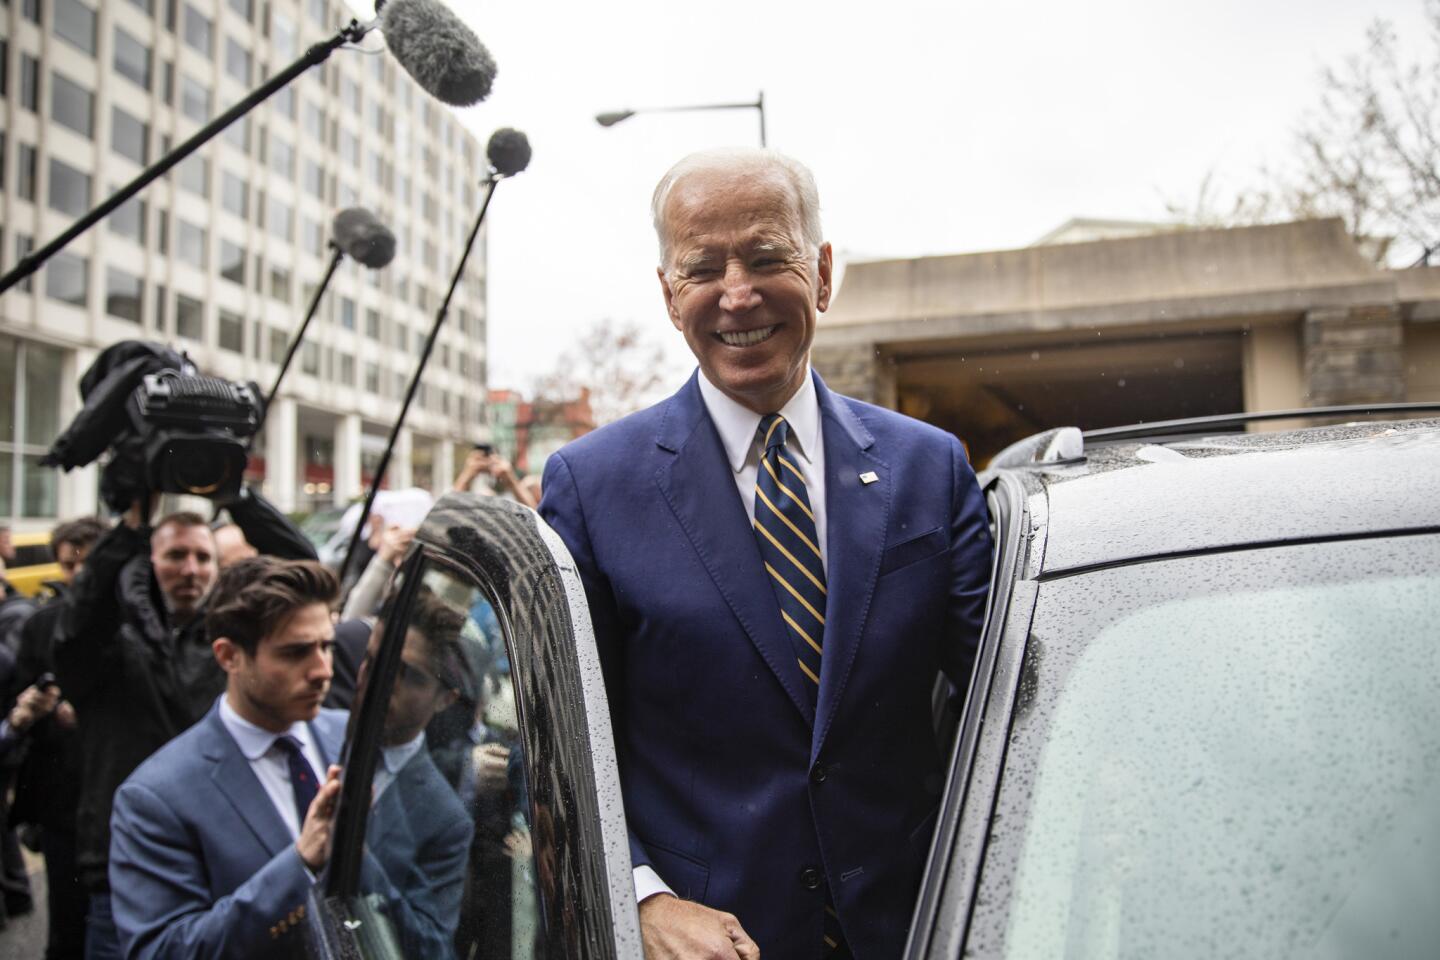 Joe Biden announces presidential run